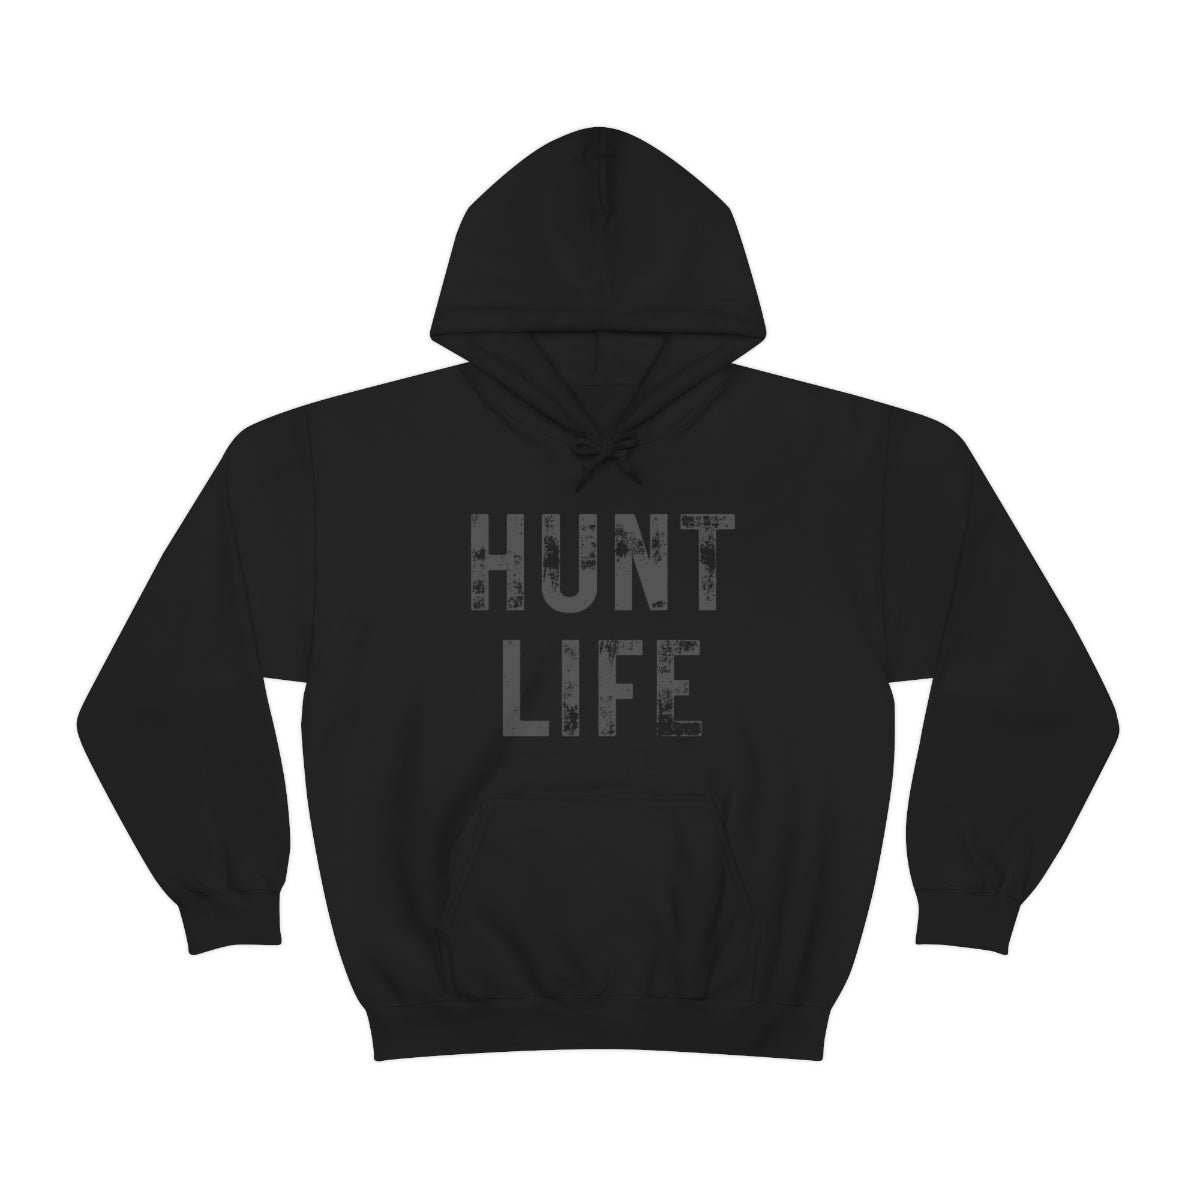 Hunt Life Hooded Sweatshirt